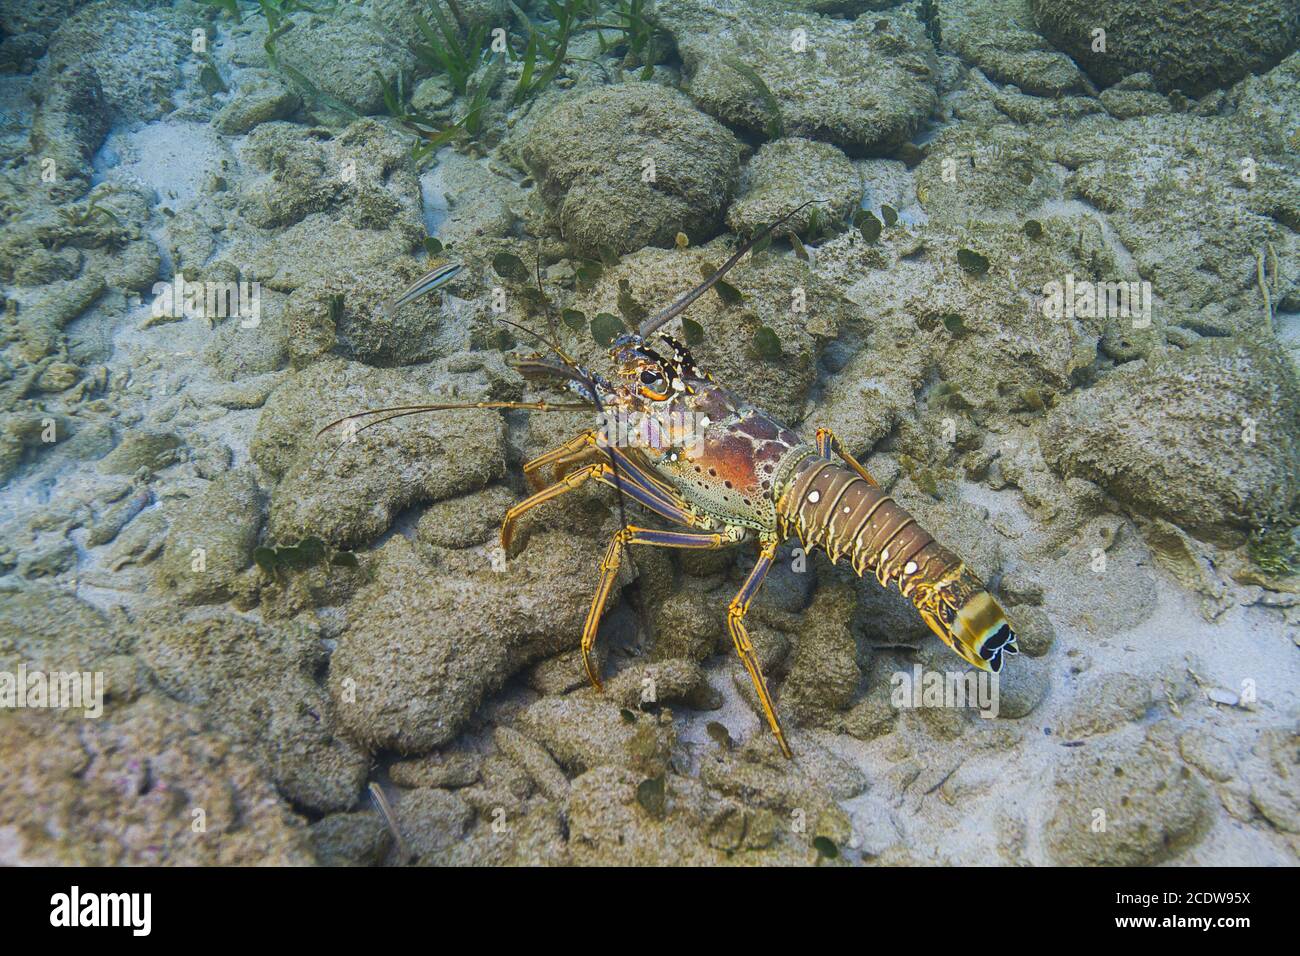 Panulirus argus lobster Stock Photo